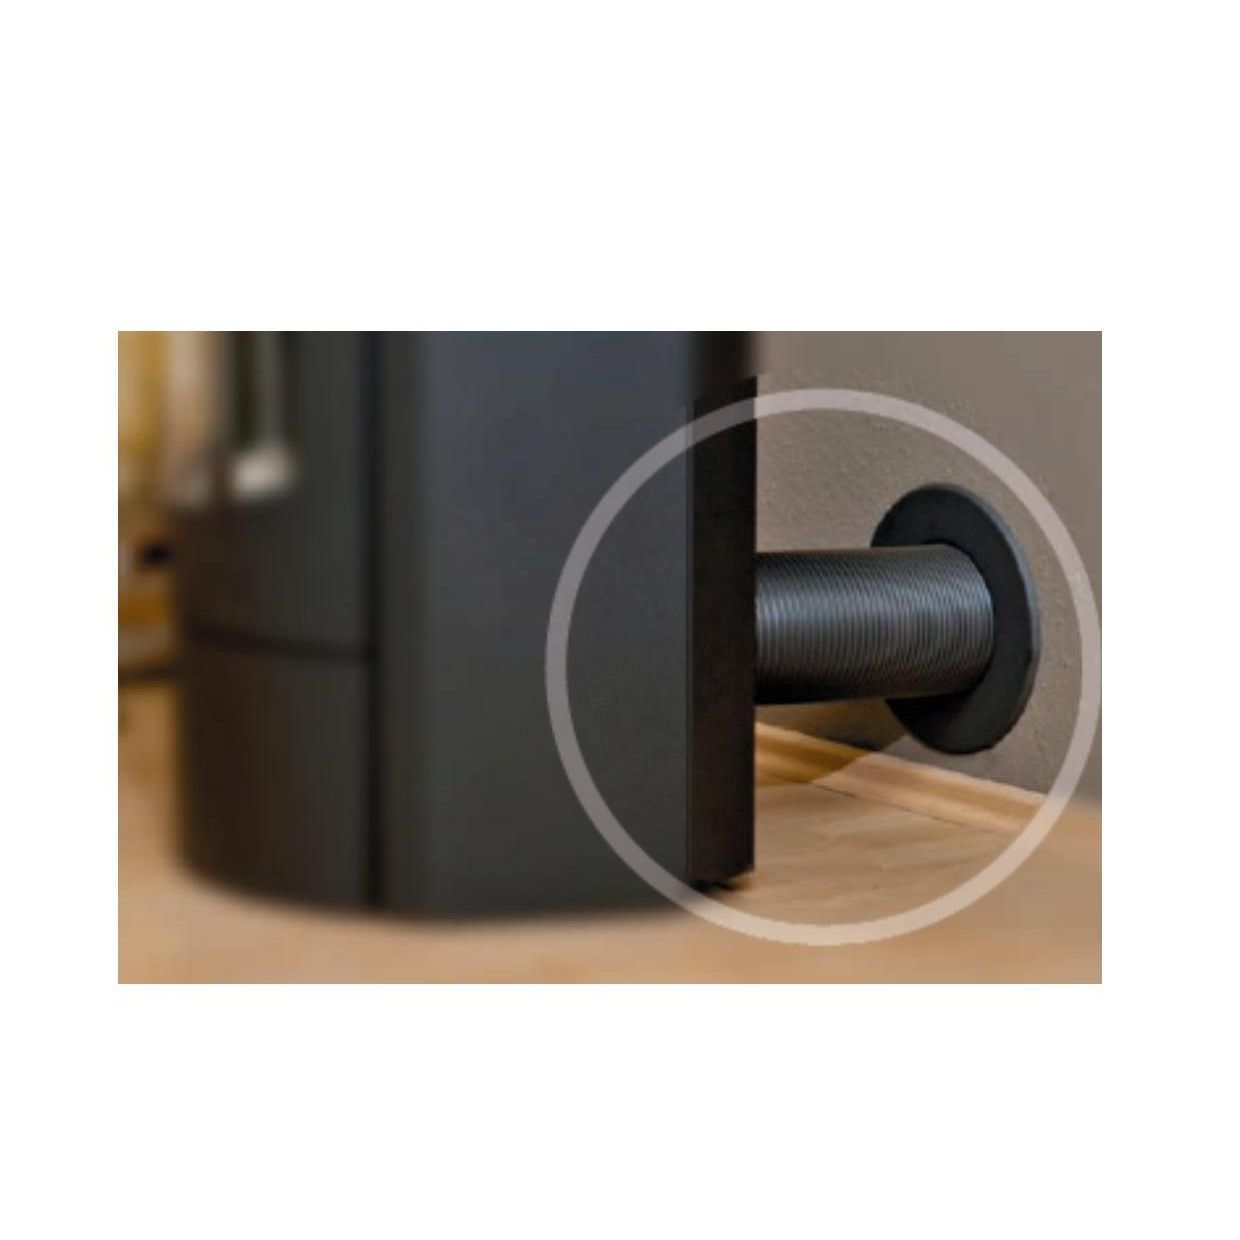 CB Aluflexrohr Standard farbig beschichtet schwarz Ø 125 mm - Danninger-Shop